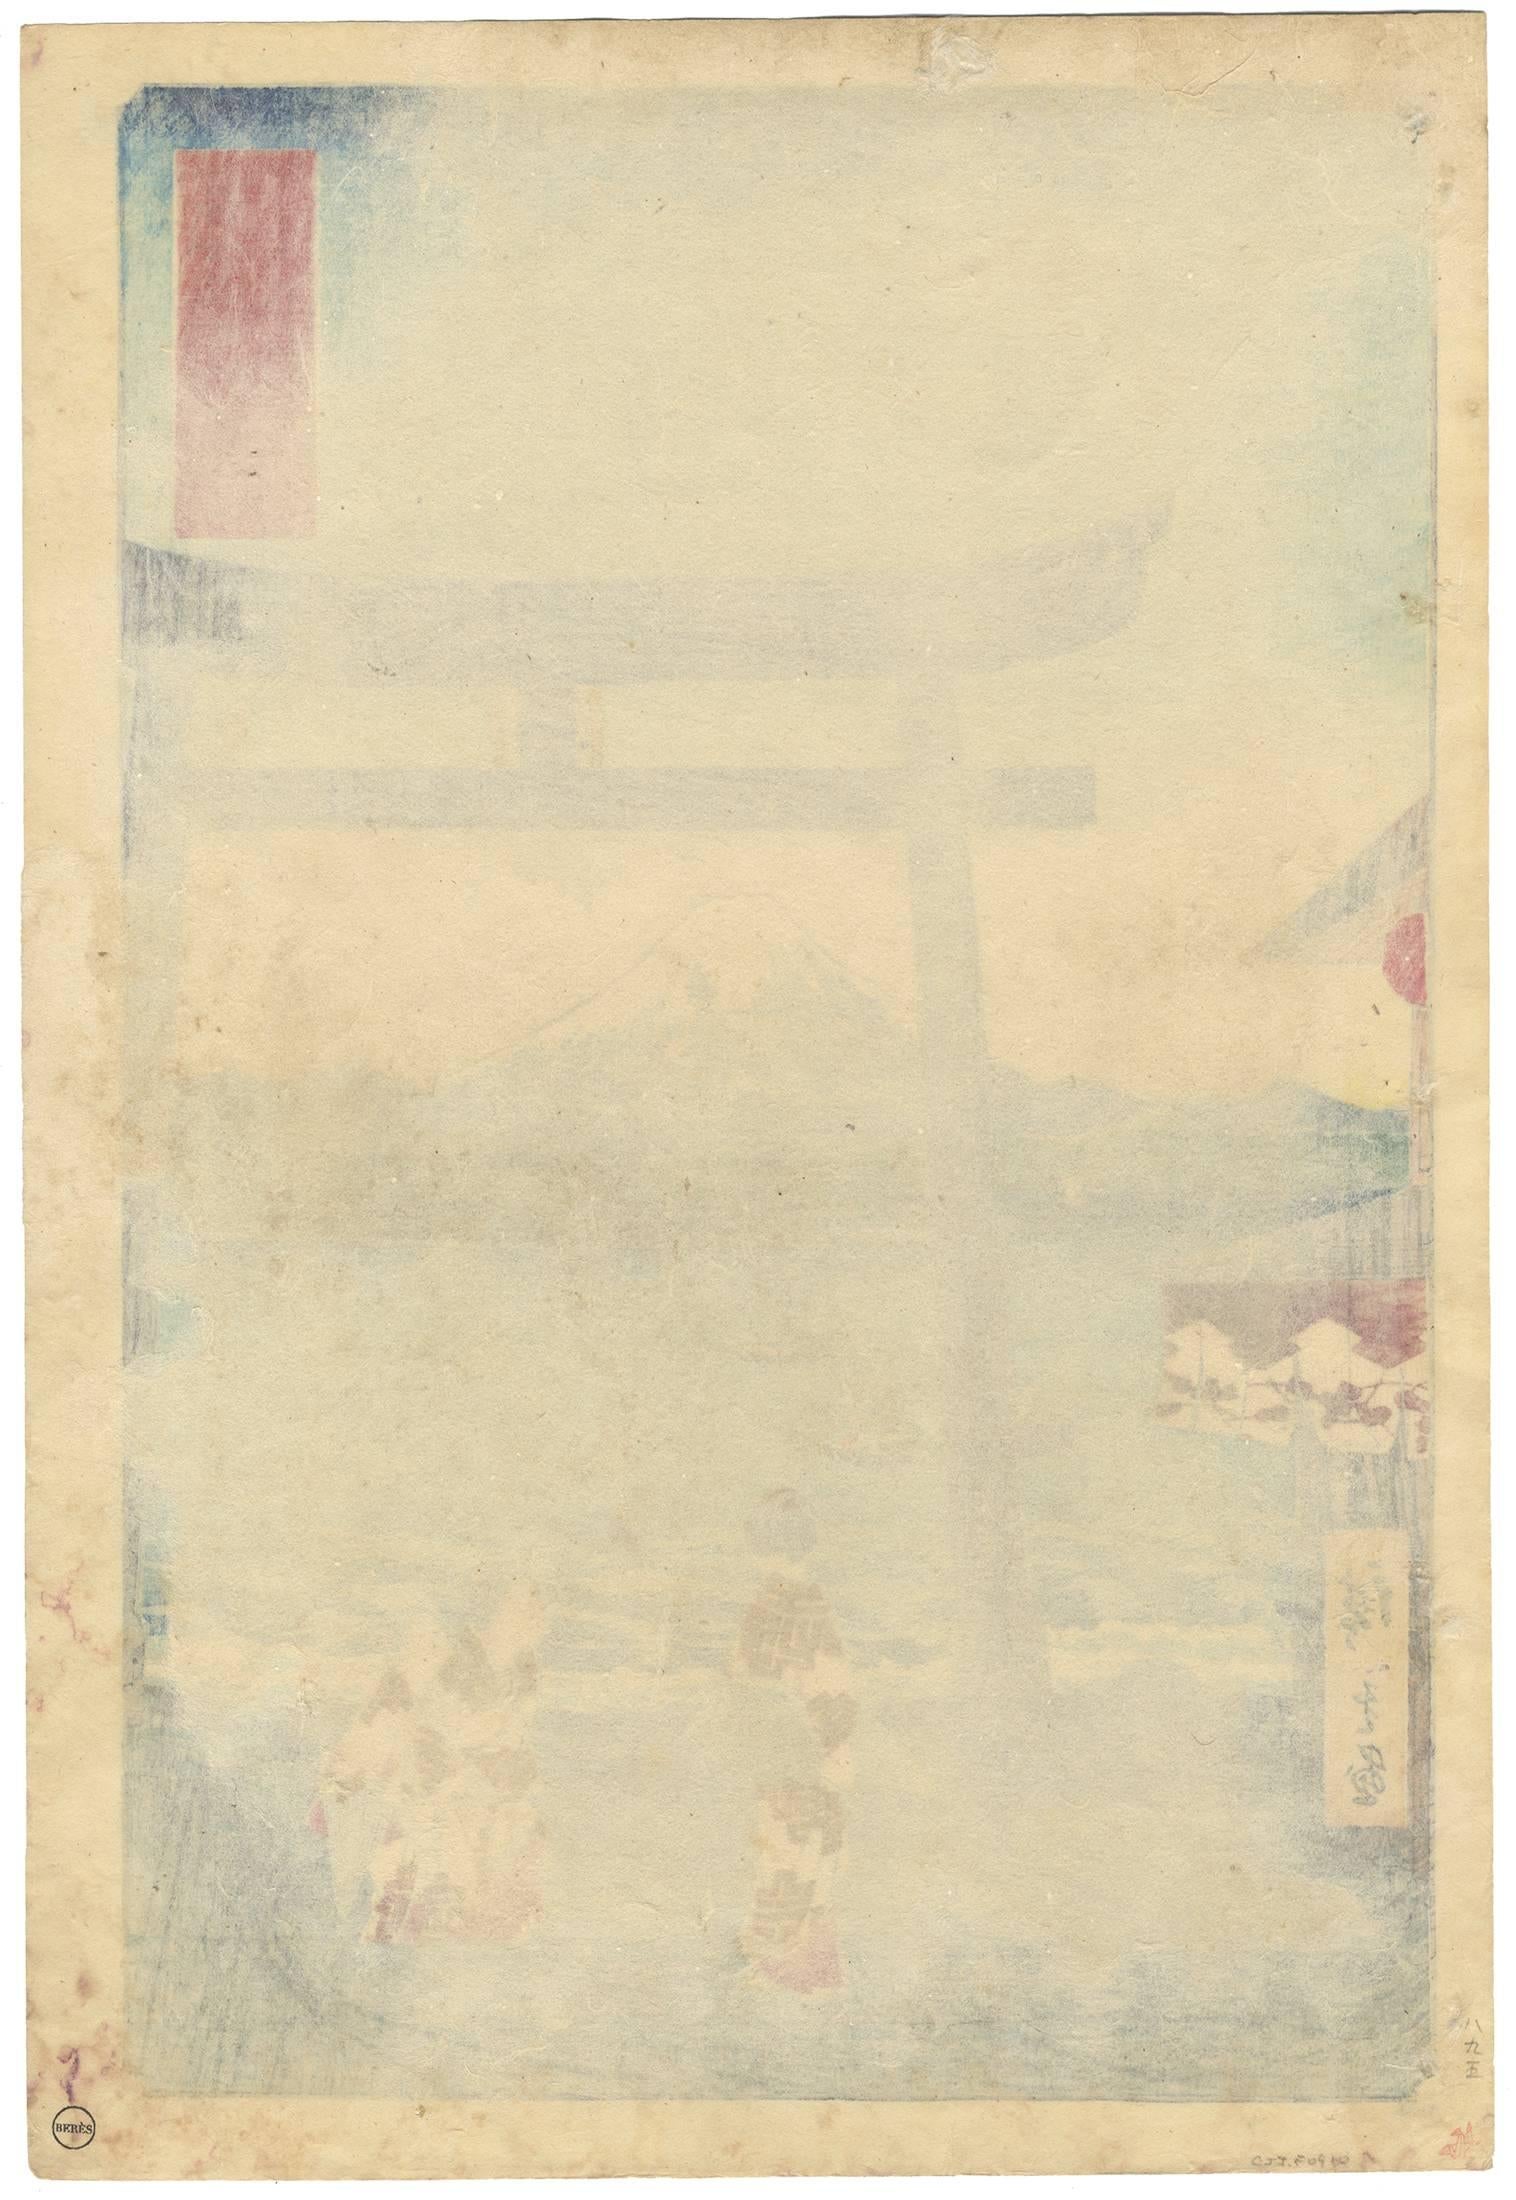 Title: 15. The Entrance at Enoshima in Sagami Province - 15. ????????
Artist: Hiroshige Ando I / Hiroshige Ando 1st
Series: 36 Views of Mt. Fuji
Pulisher: Tsutaya Kichizo
Published in 1858.

This print shows three women passing through a